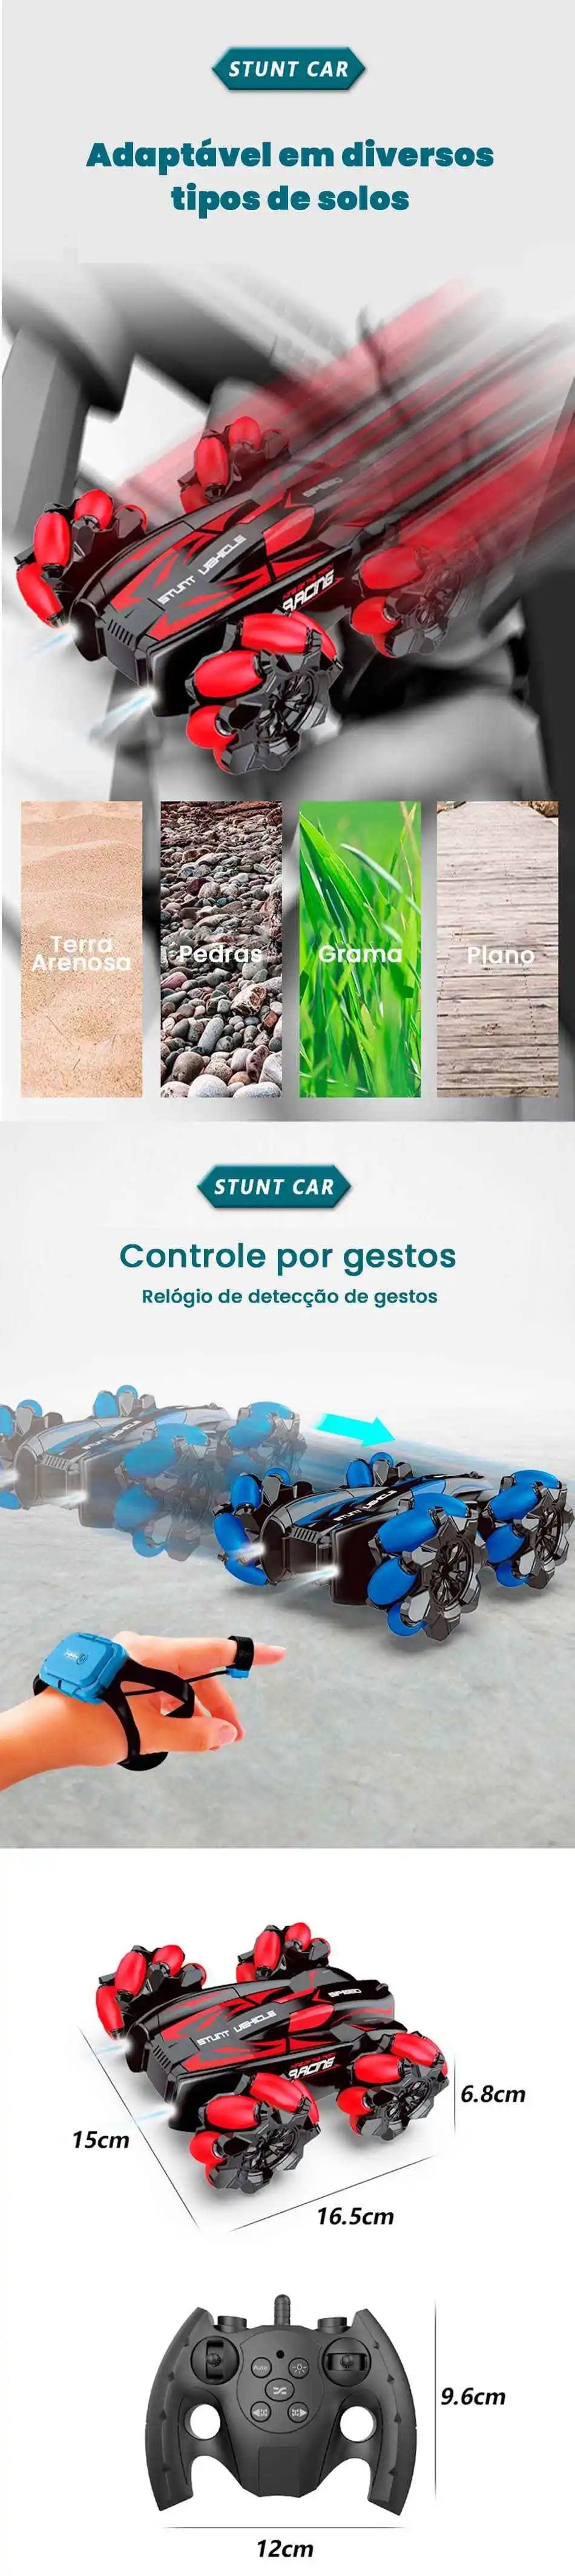 CARRO-CONTROLE-REMOTO-STUN-CAR-CONTROLADO-POR-GESTOS